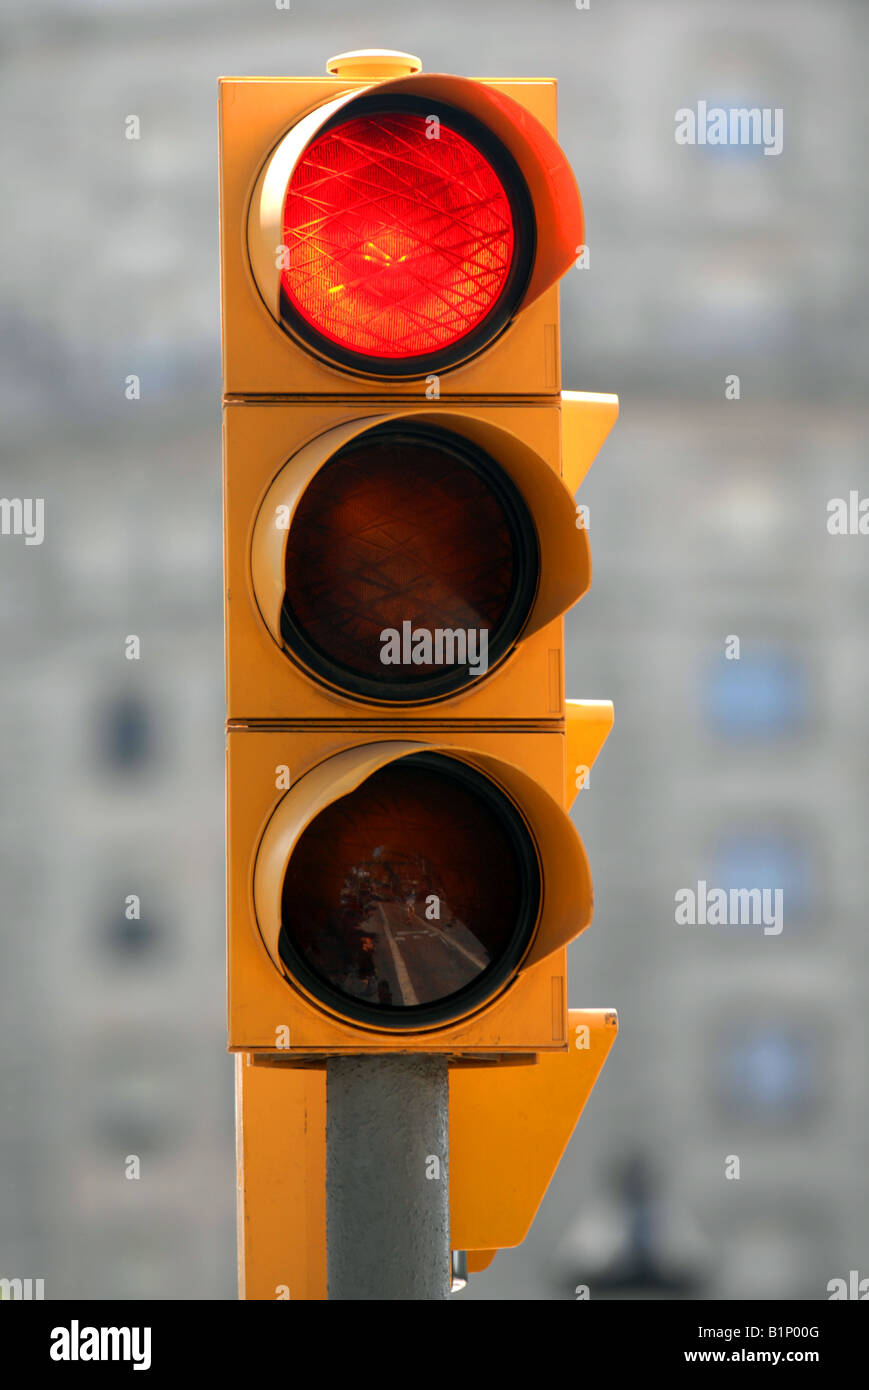 Red traffic light Stock Photo